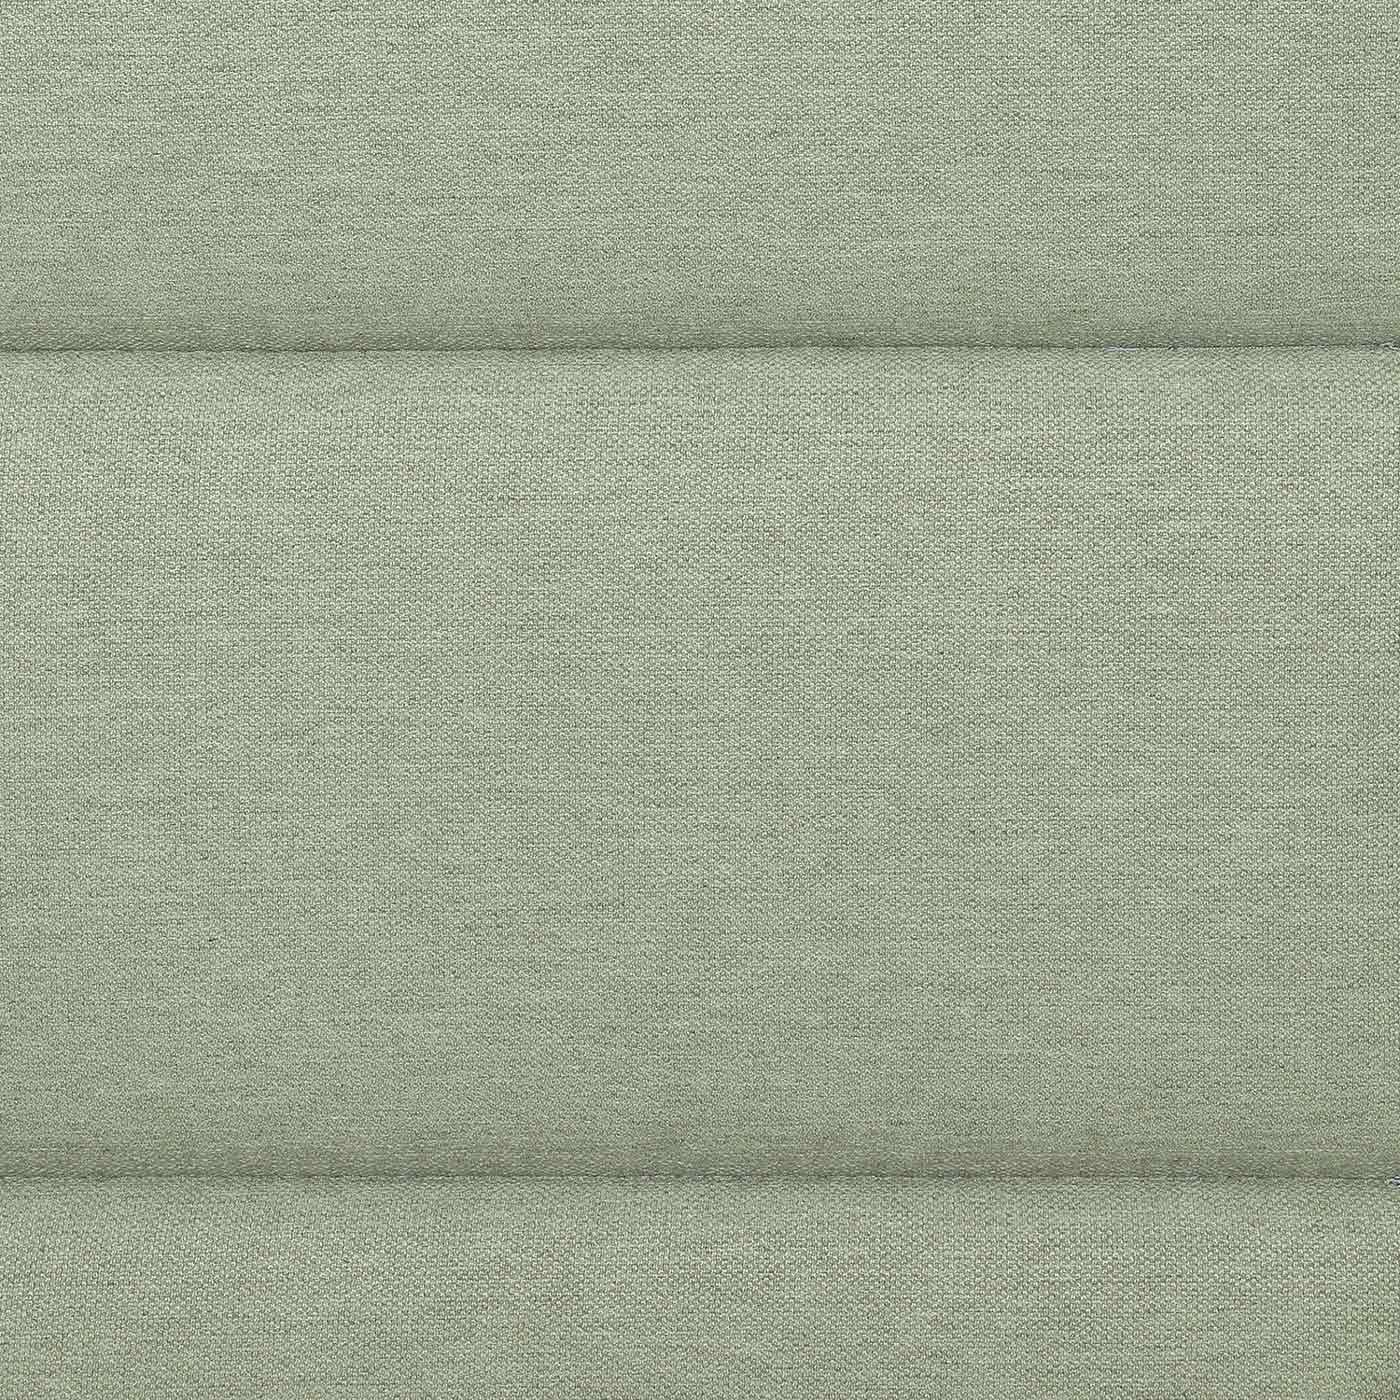 GO-DE Sesselauflage mittel 108x48cm Polyester Grün